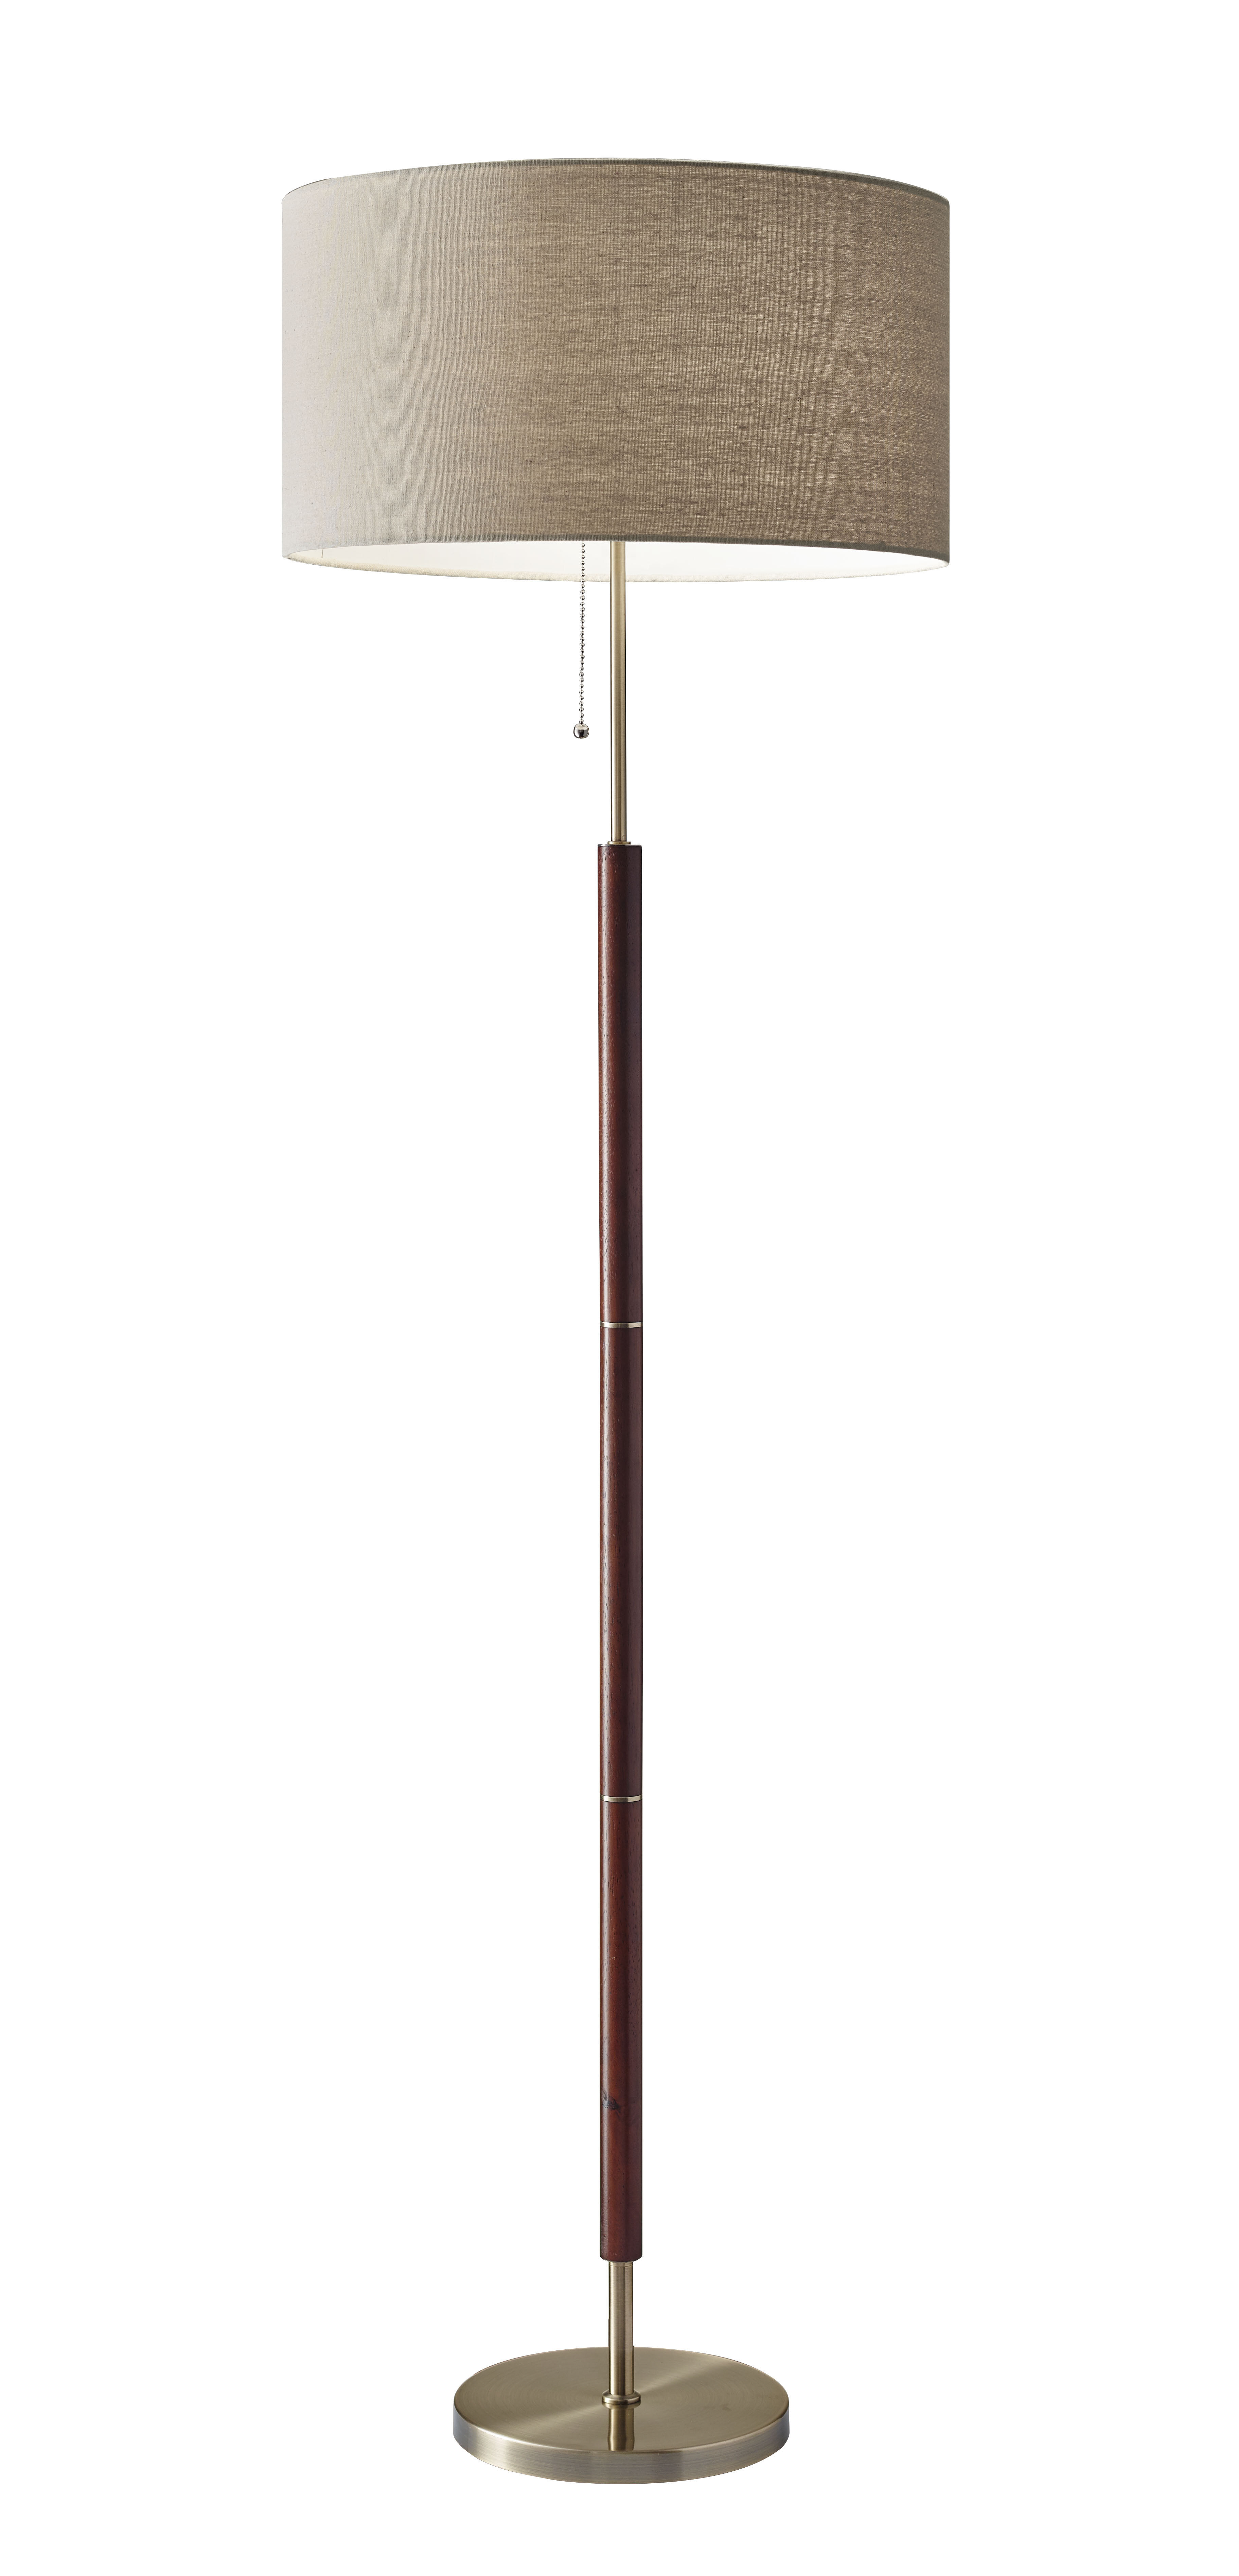 Hyannis 655 Floor Lamp pertaining to dimensions 3647 X 7582